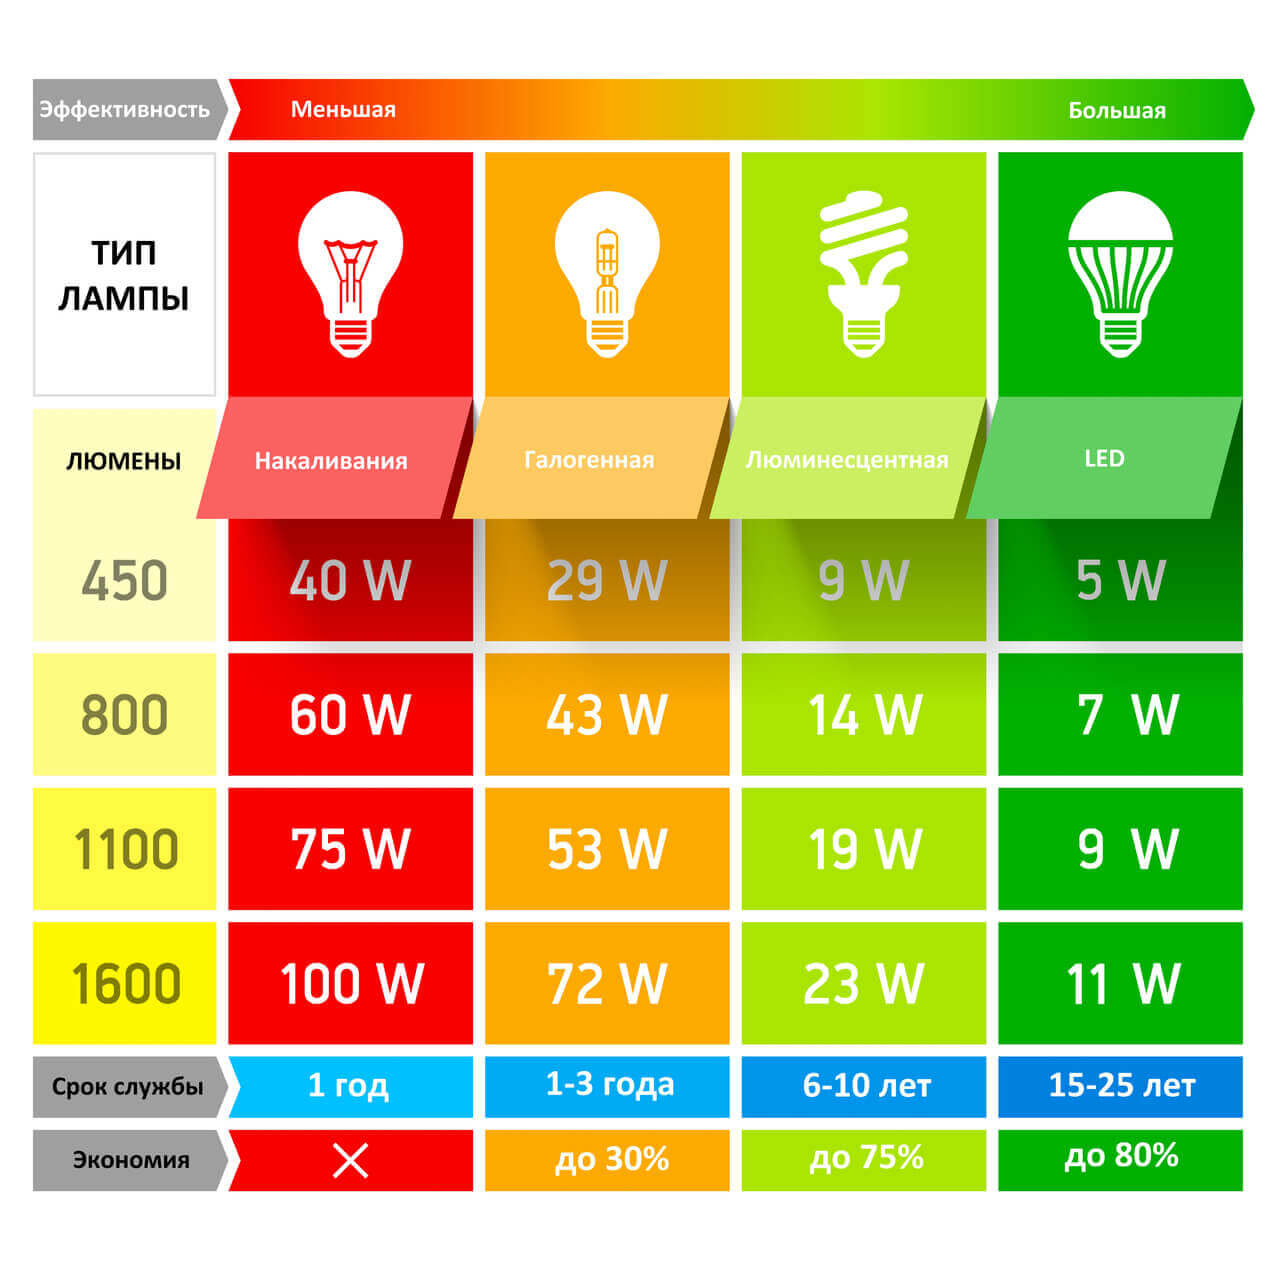 The advantages of LED bulbs